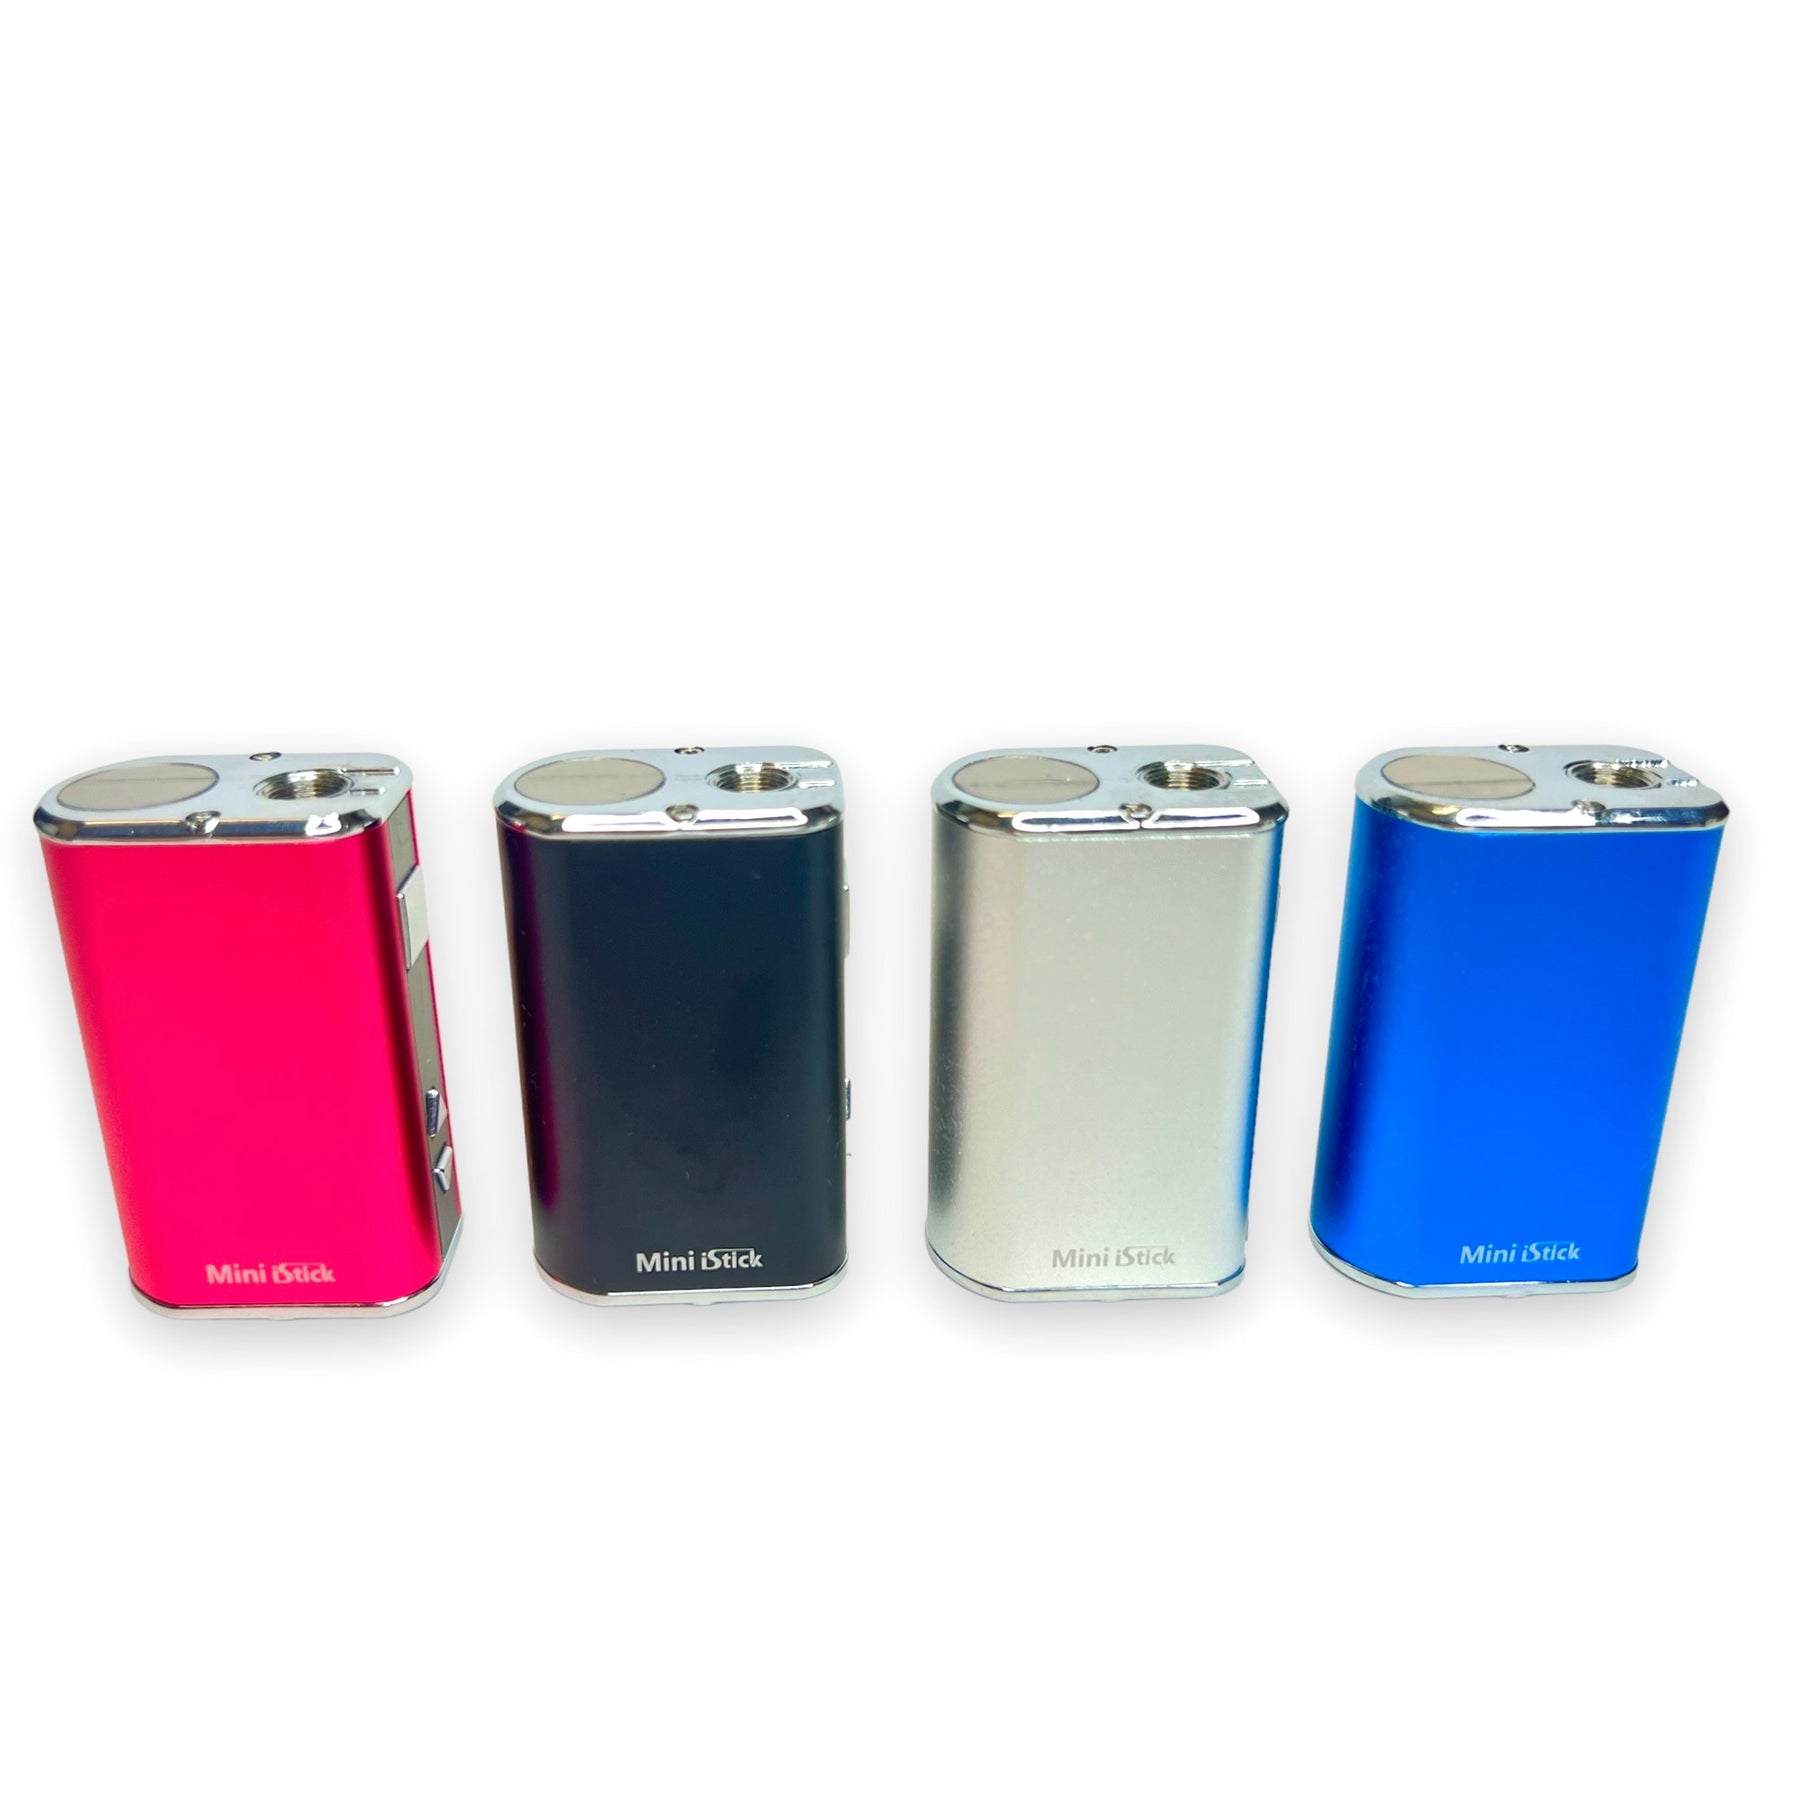 eLeaf Mini iStick Box Mod Batteries different colors